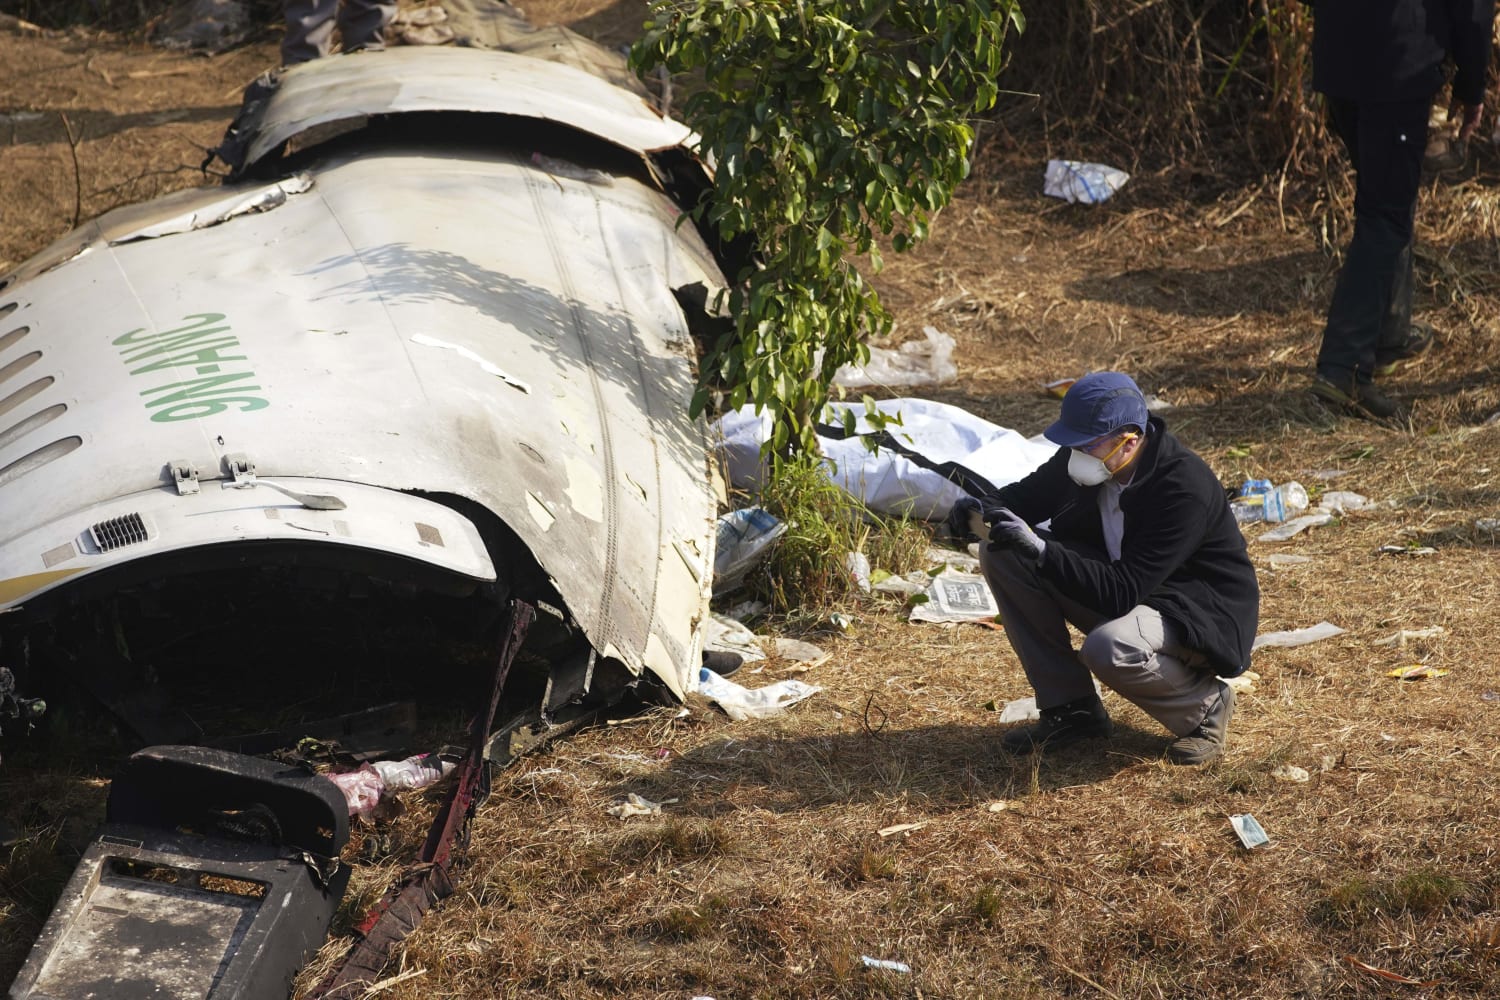 At least 4 U.S. residents among those killed in Nepal plane crash